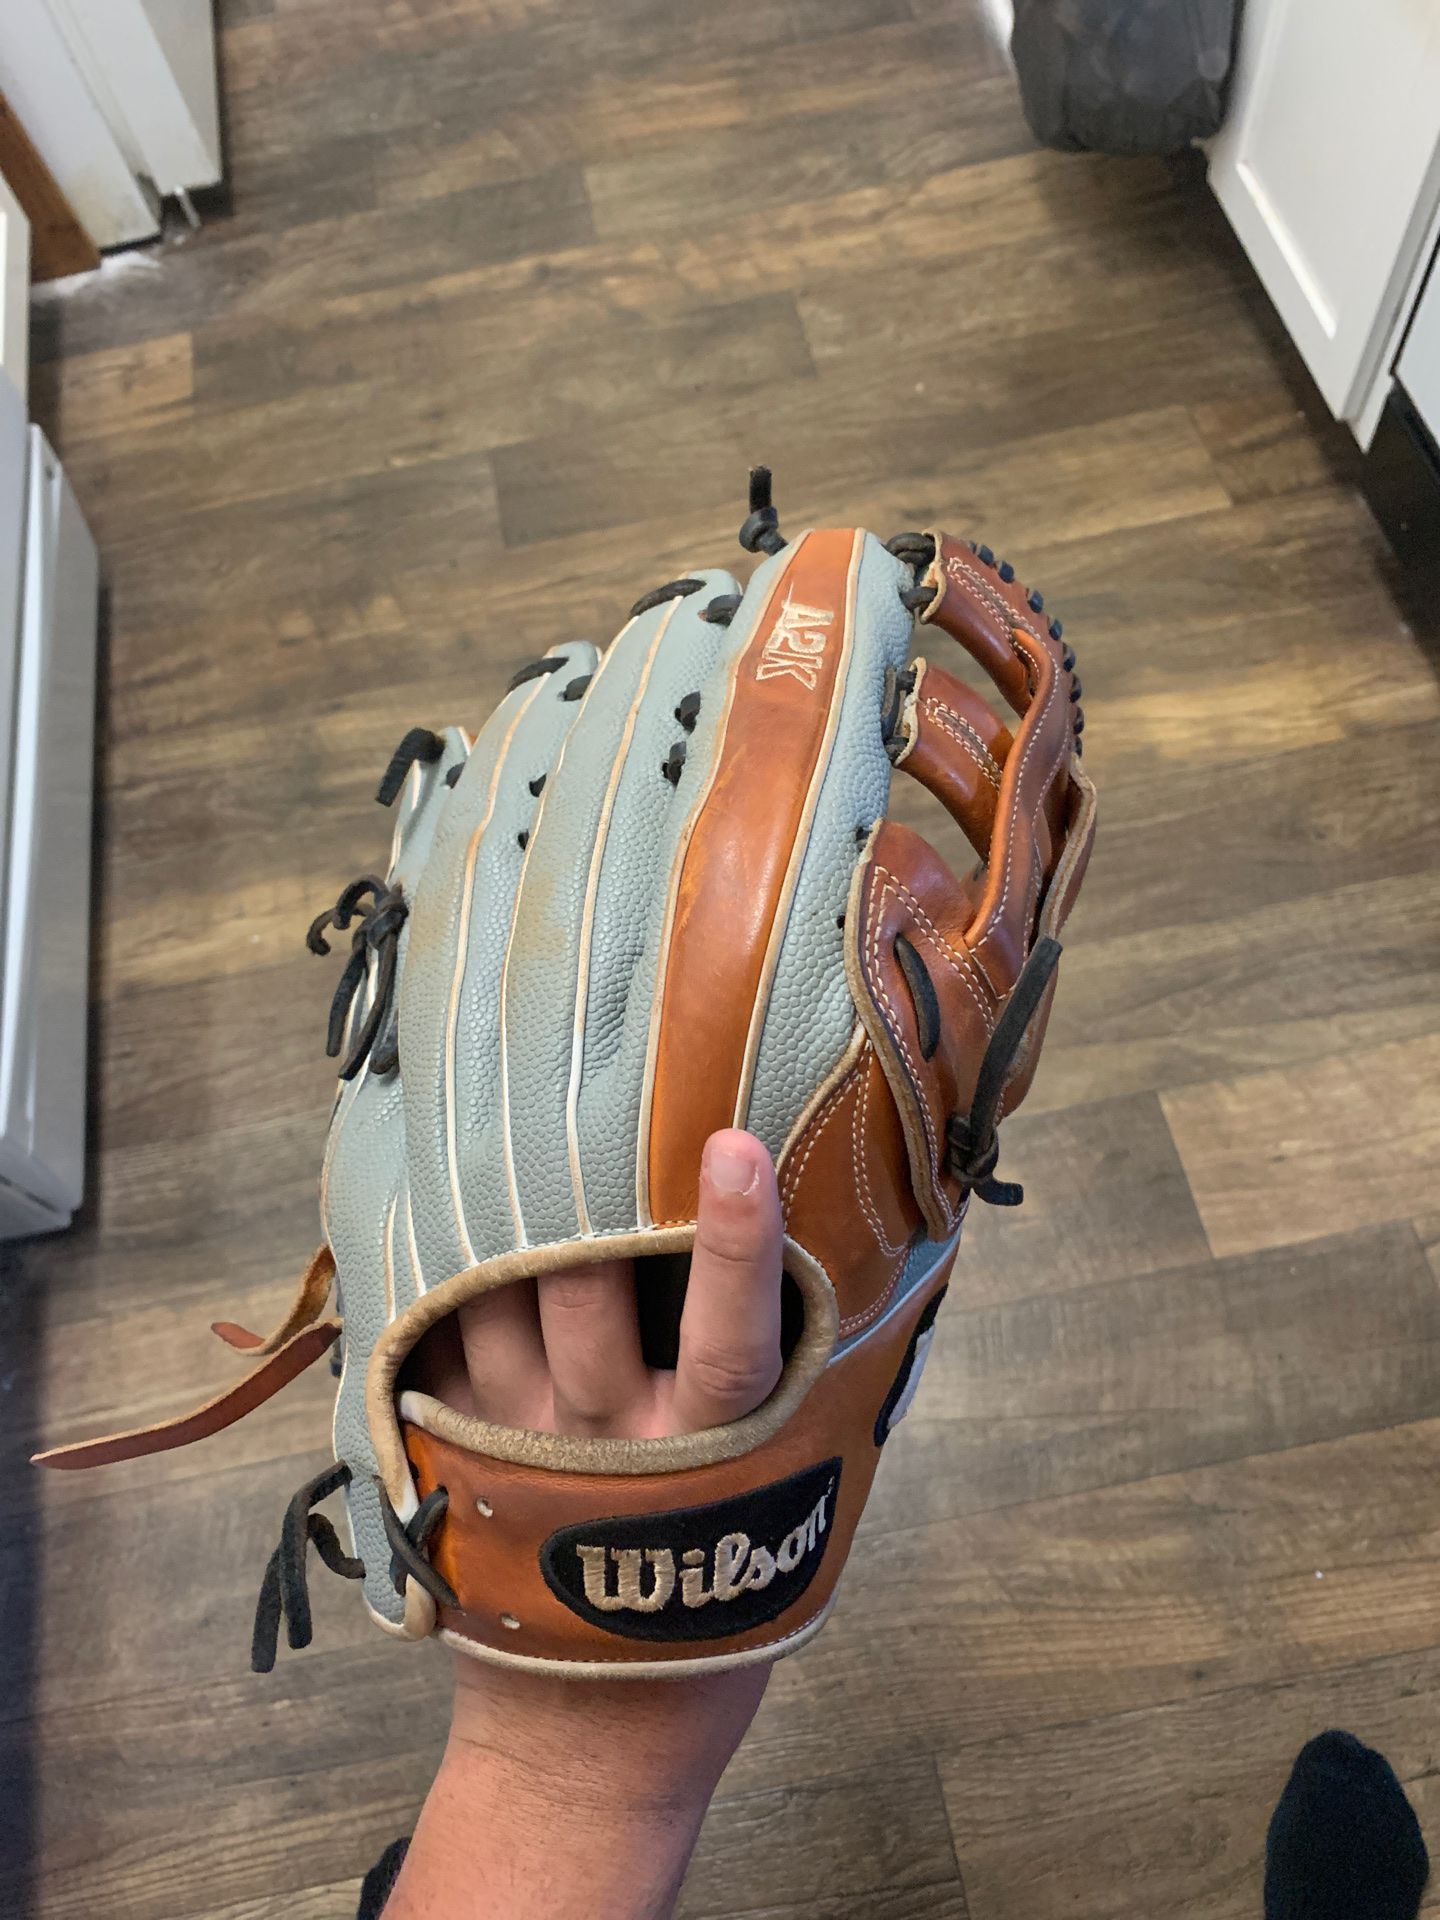 Wilson outfield baseball glove